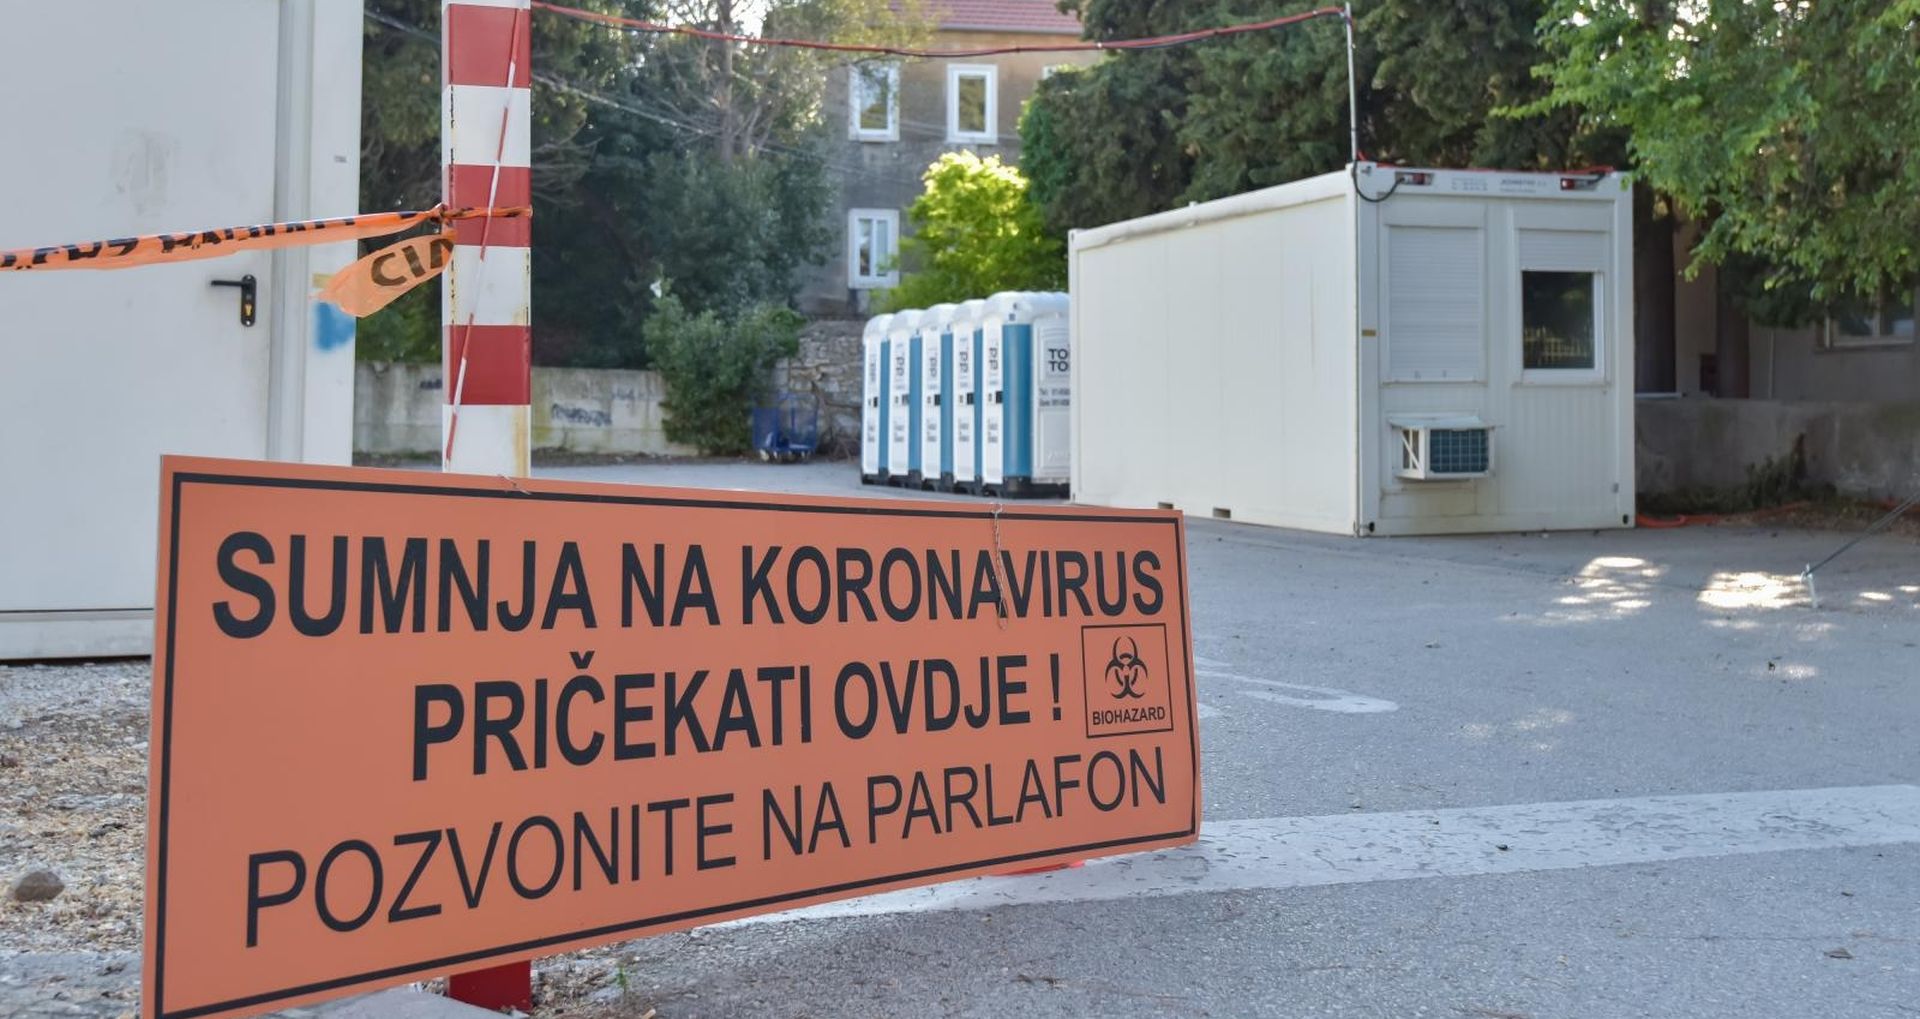 24.04.2020., Zadar - Na parkiralistu OB Zadar danas je uspostavljena lokacija za drive-in testiranje na koronavirus.
Photo: Dino Stanin/PIXSELL